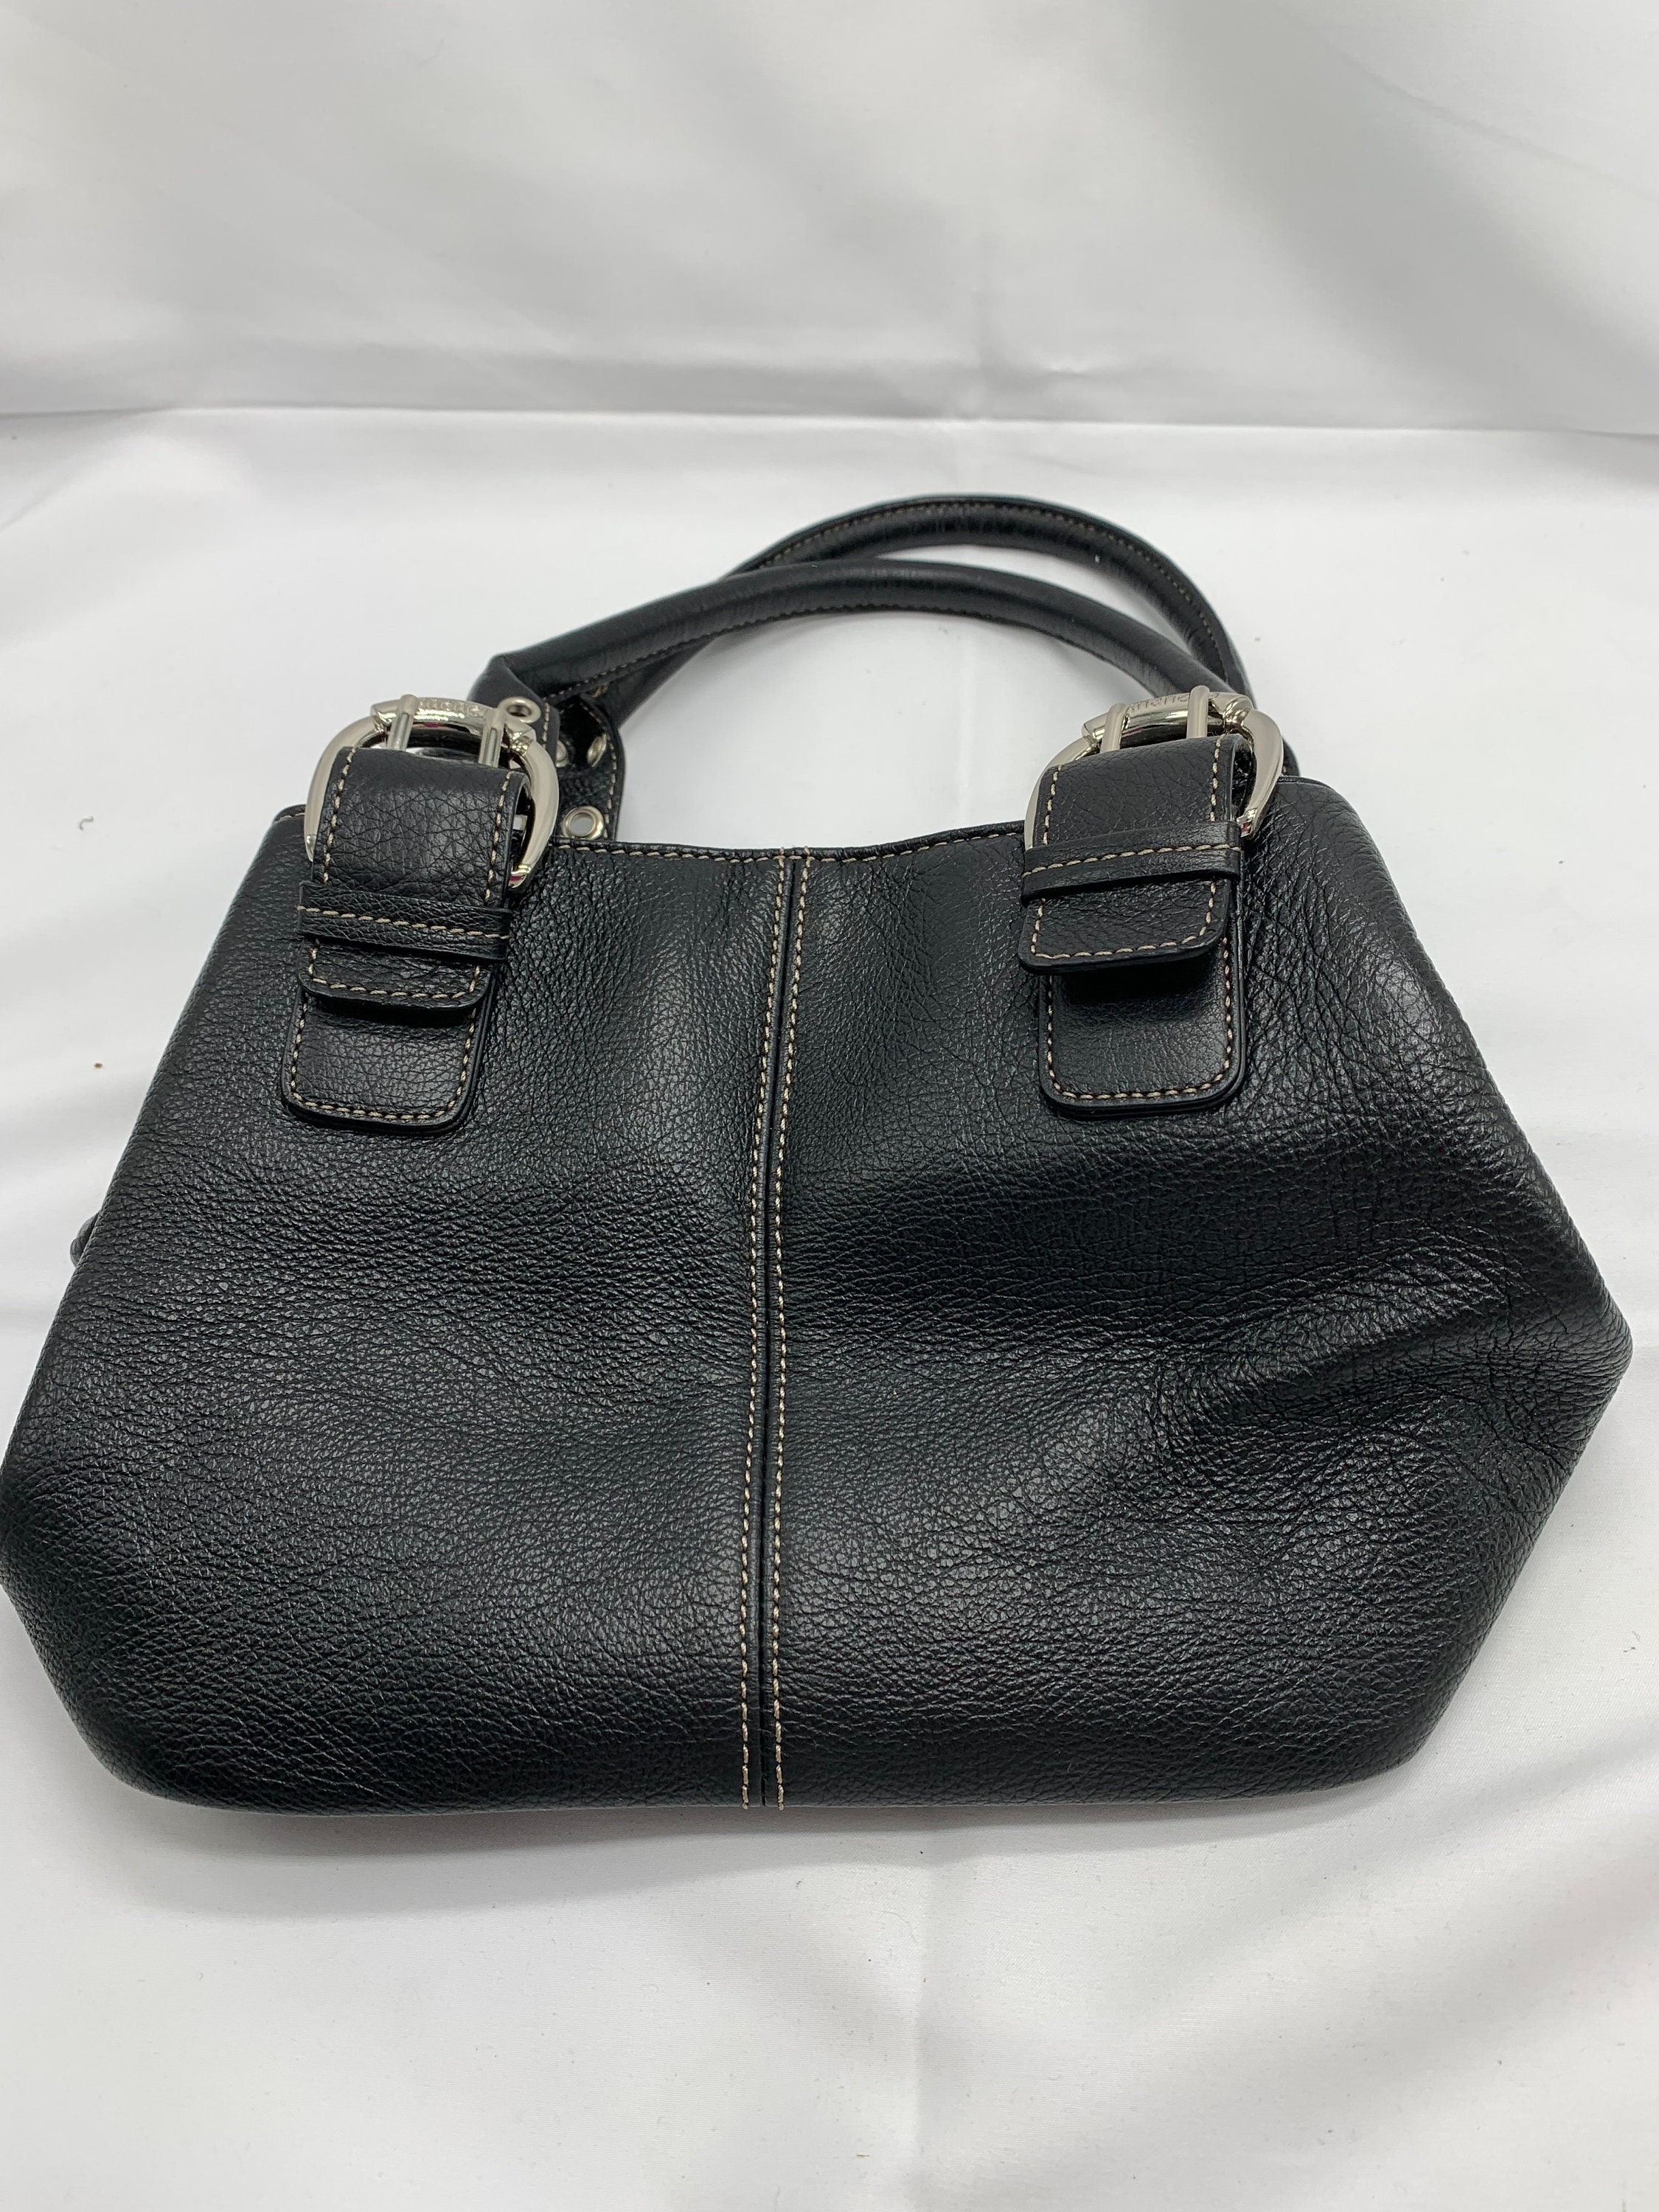 Small Black Leather Tignanello Handbag - Clearance Sale